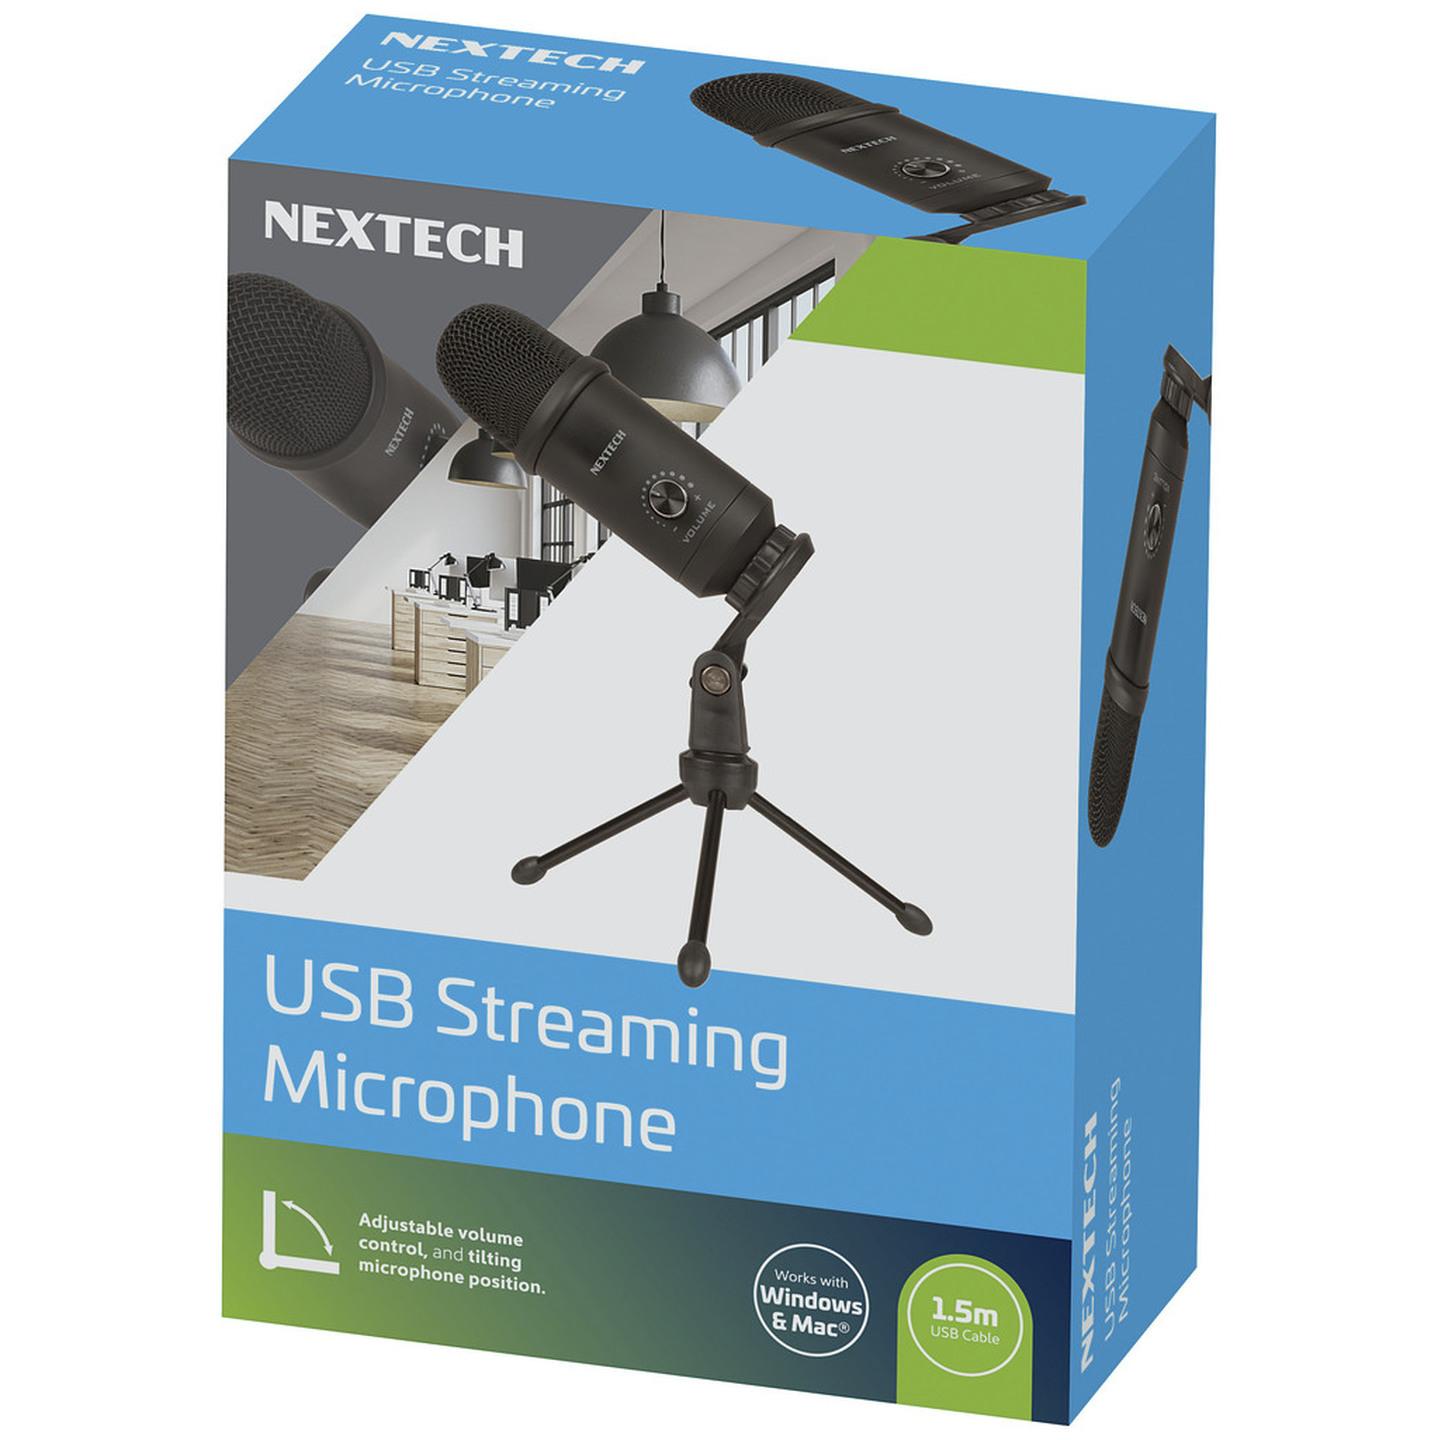 Nextech USB Streaming Microphone